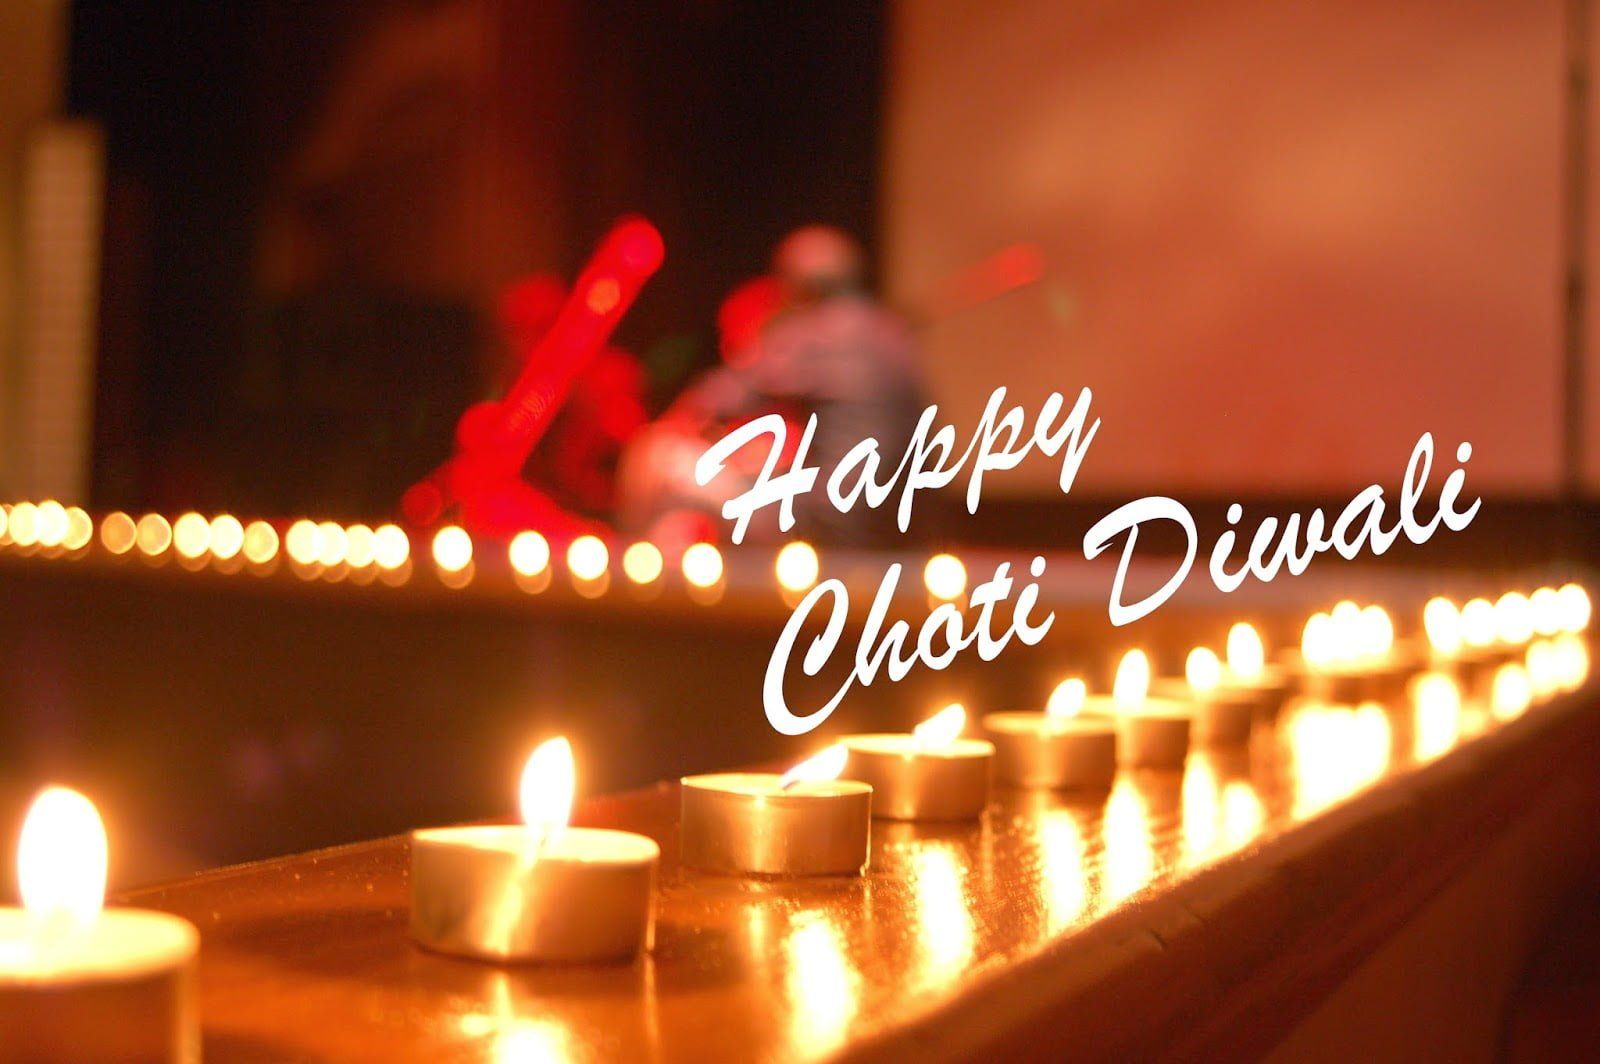 Happy Choti Diwali HD Image Wallpaper Picture